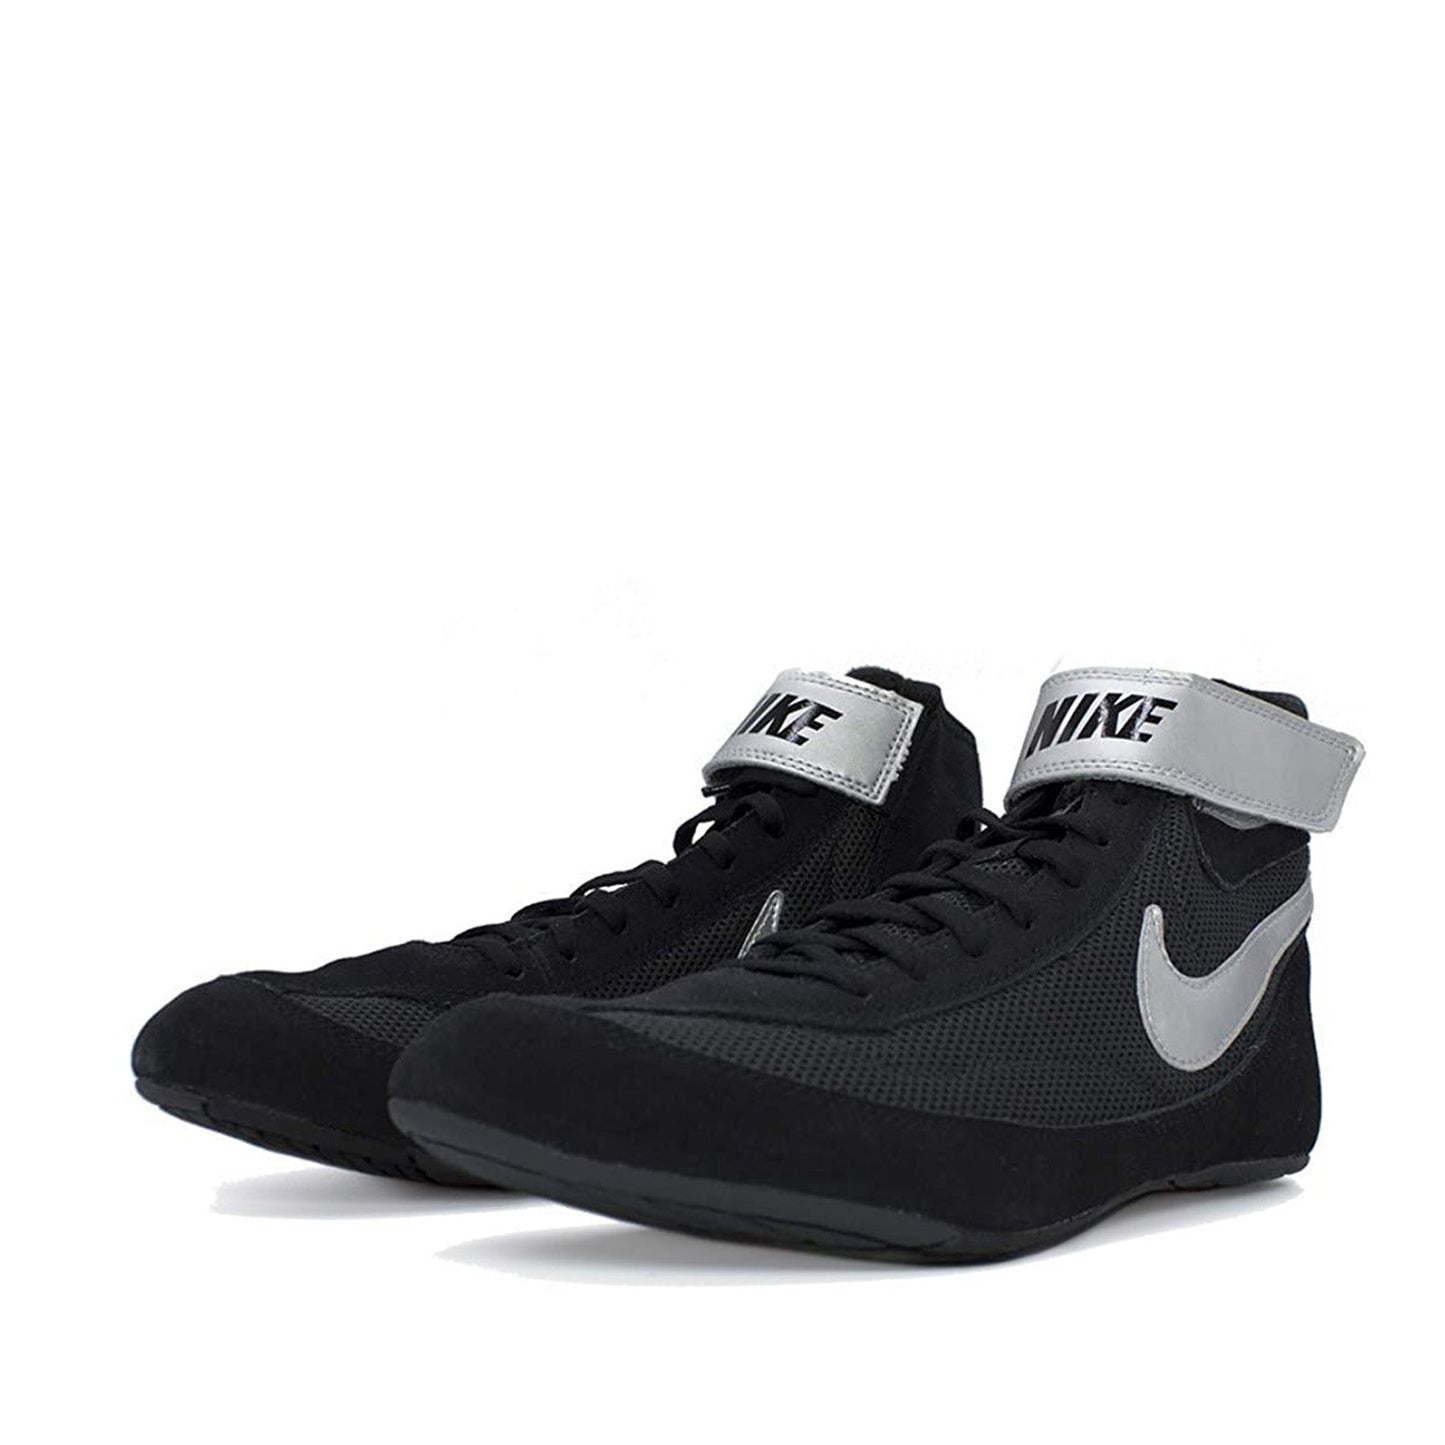 Nike souliers de boxe SPEEDSWEEP VII-Souliers de boxe-Nike®-8-Canada Fighting